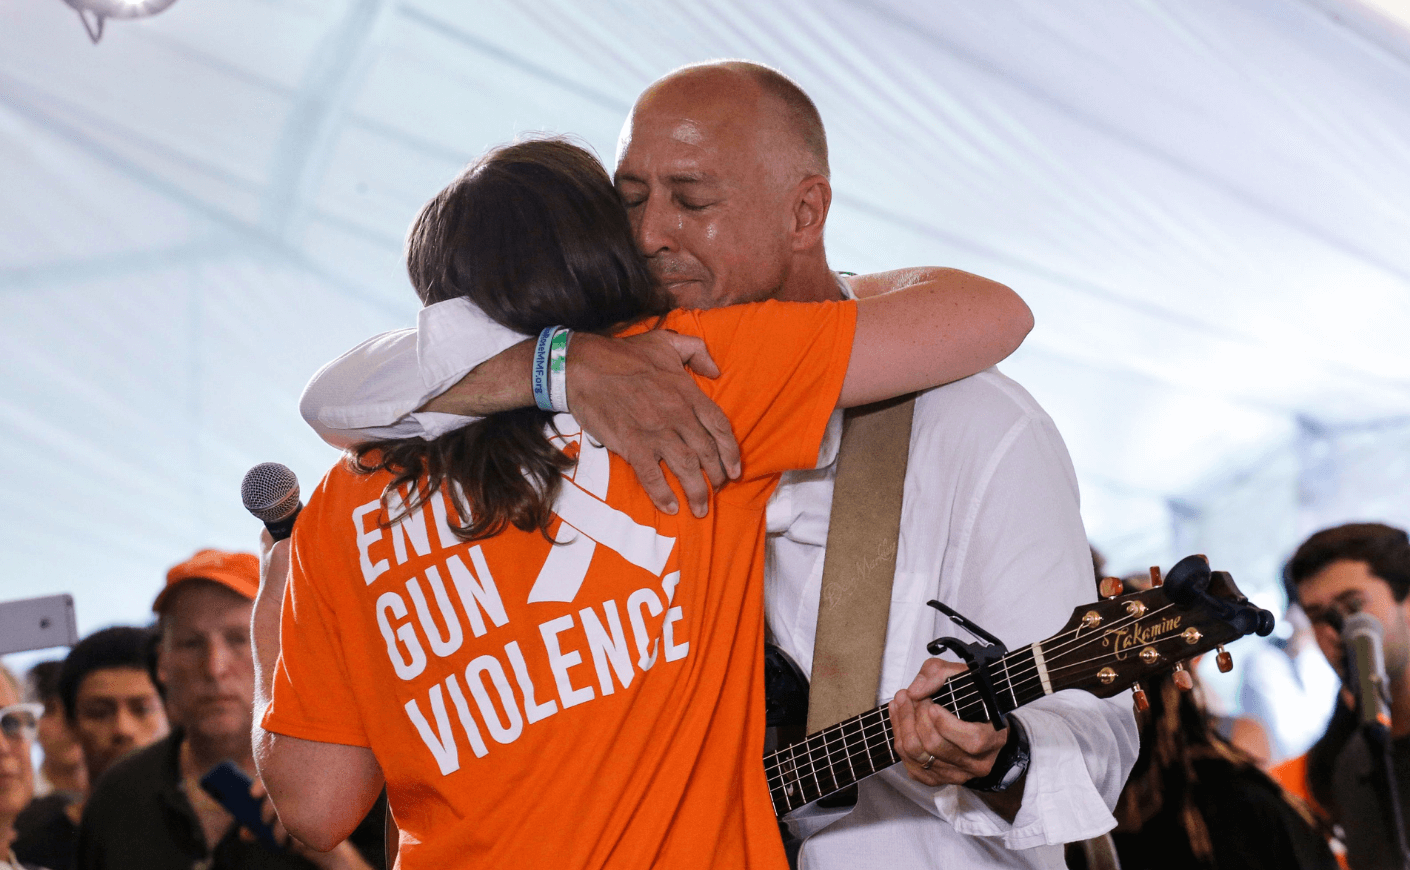 Mark Barden hugging a woman at a gun violence protest